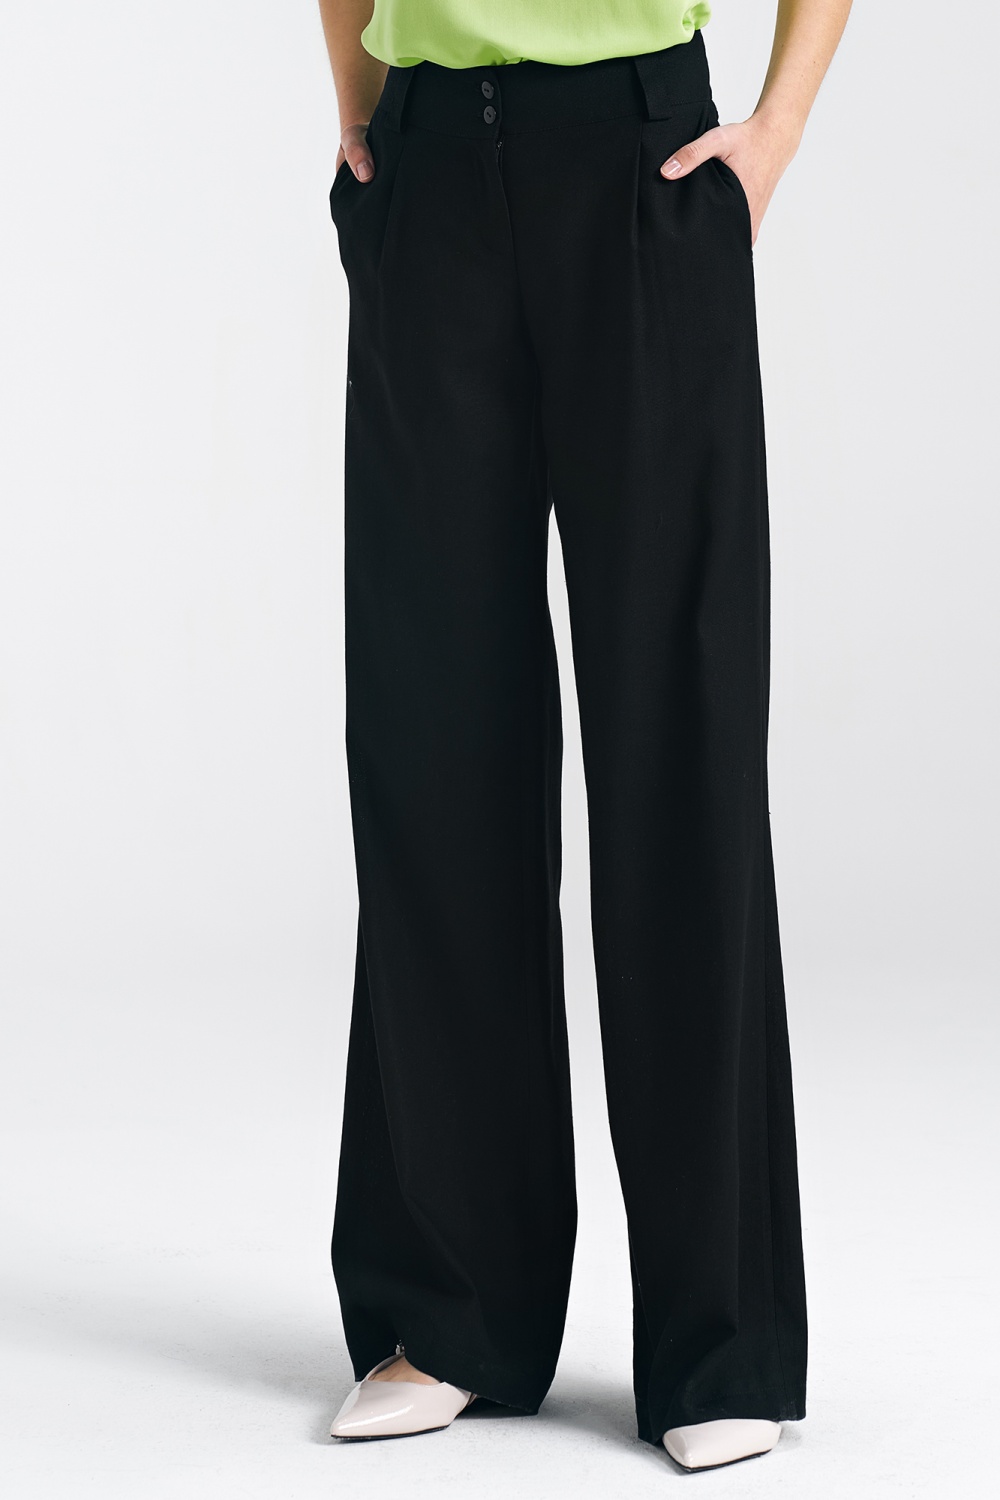  Trousers model 195168 Nife  black